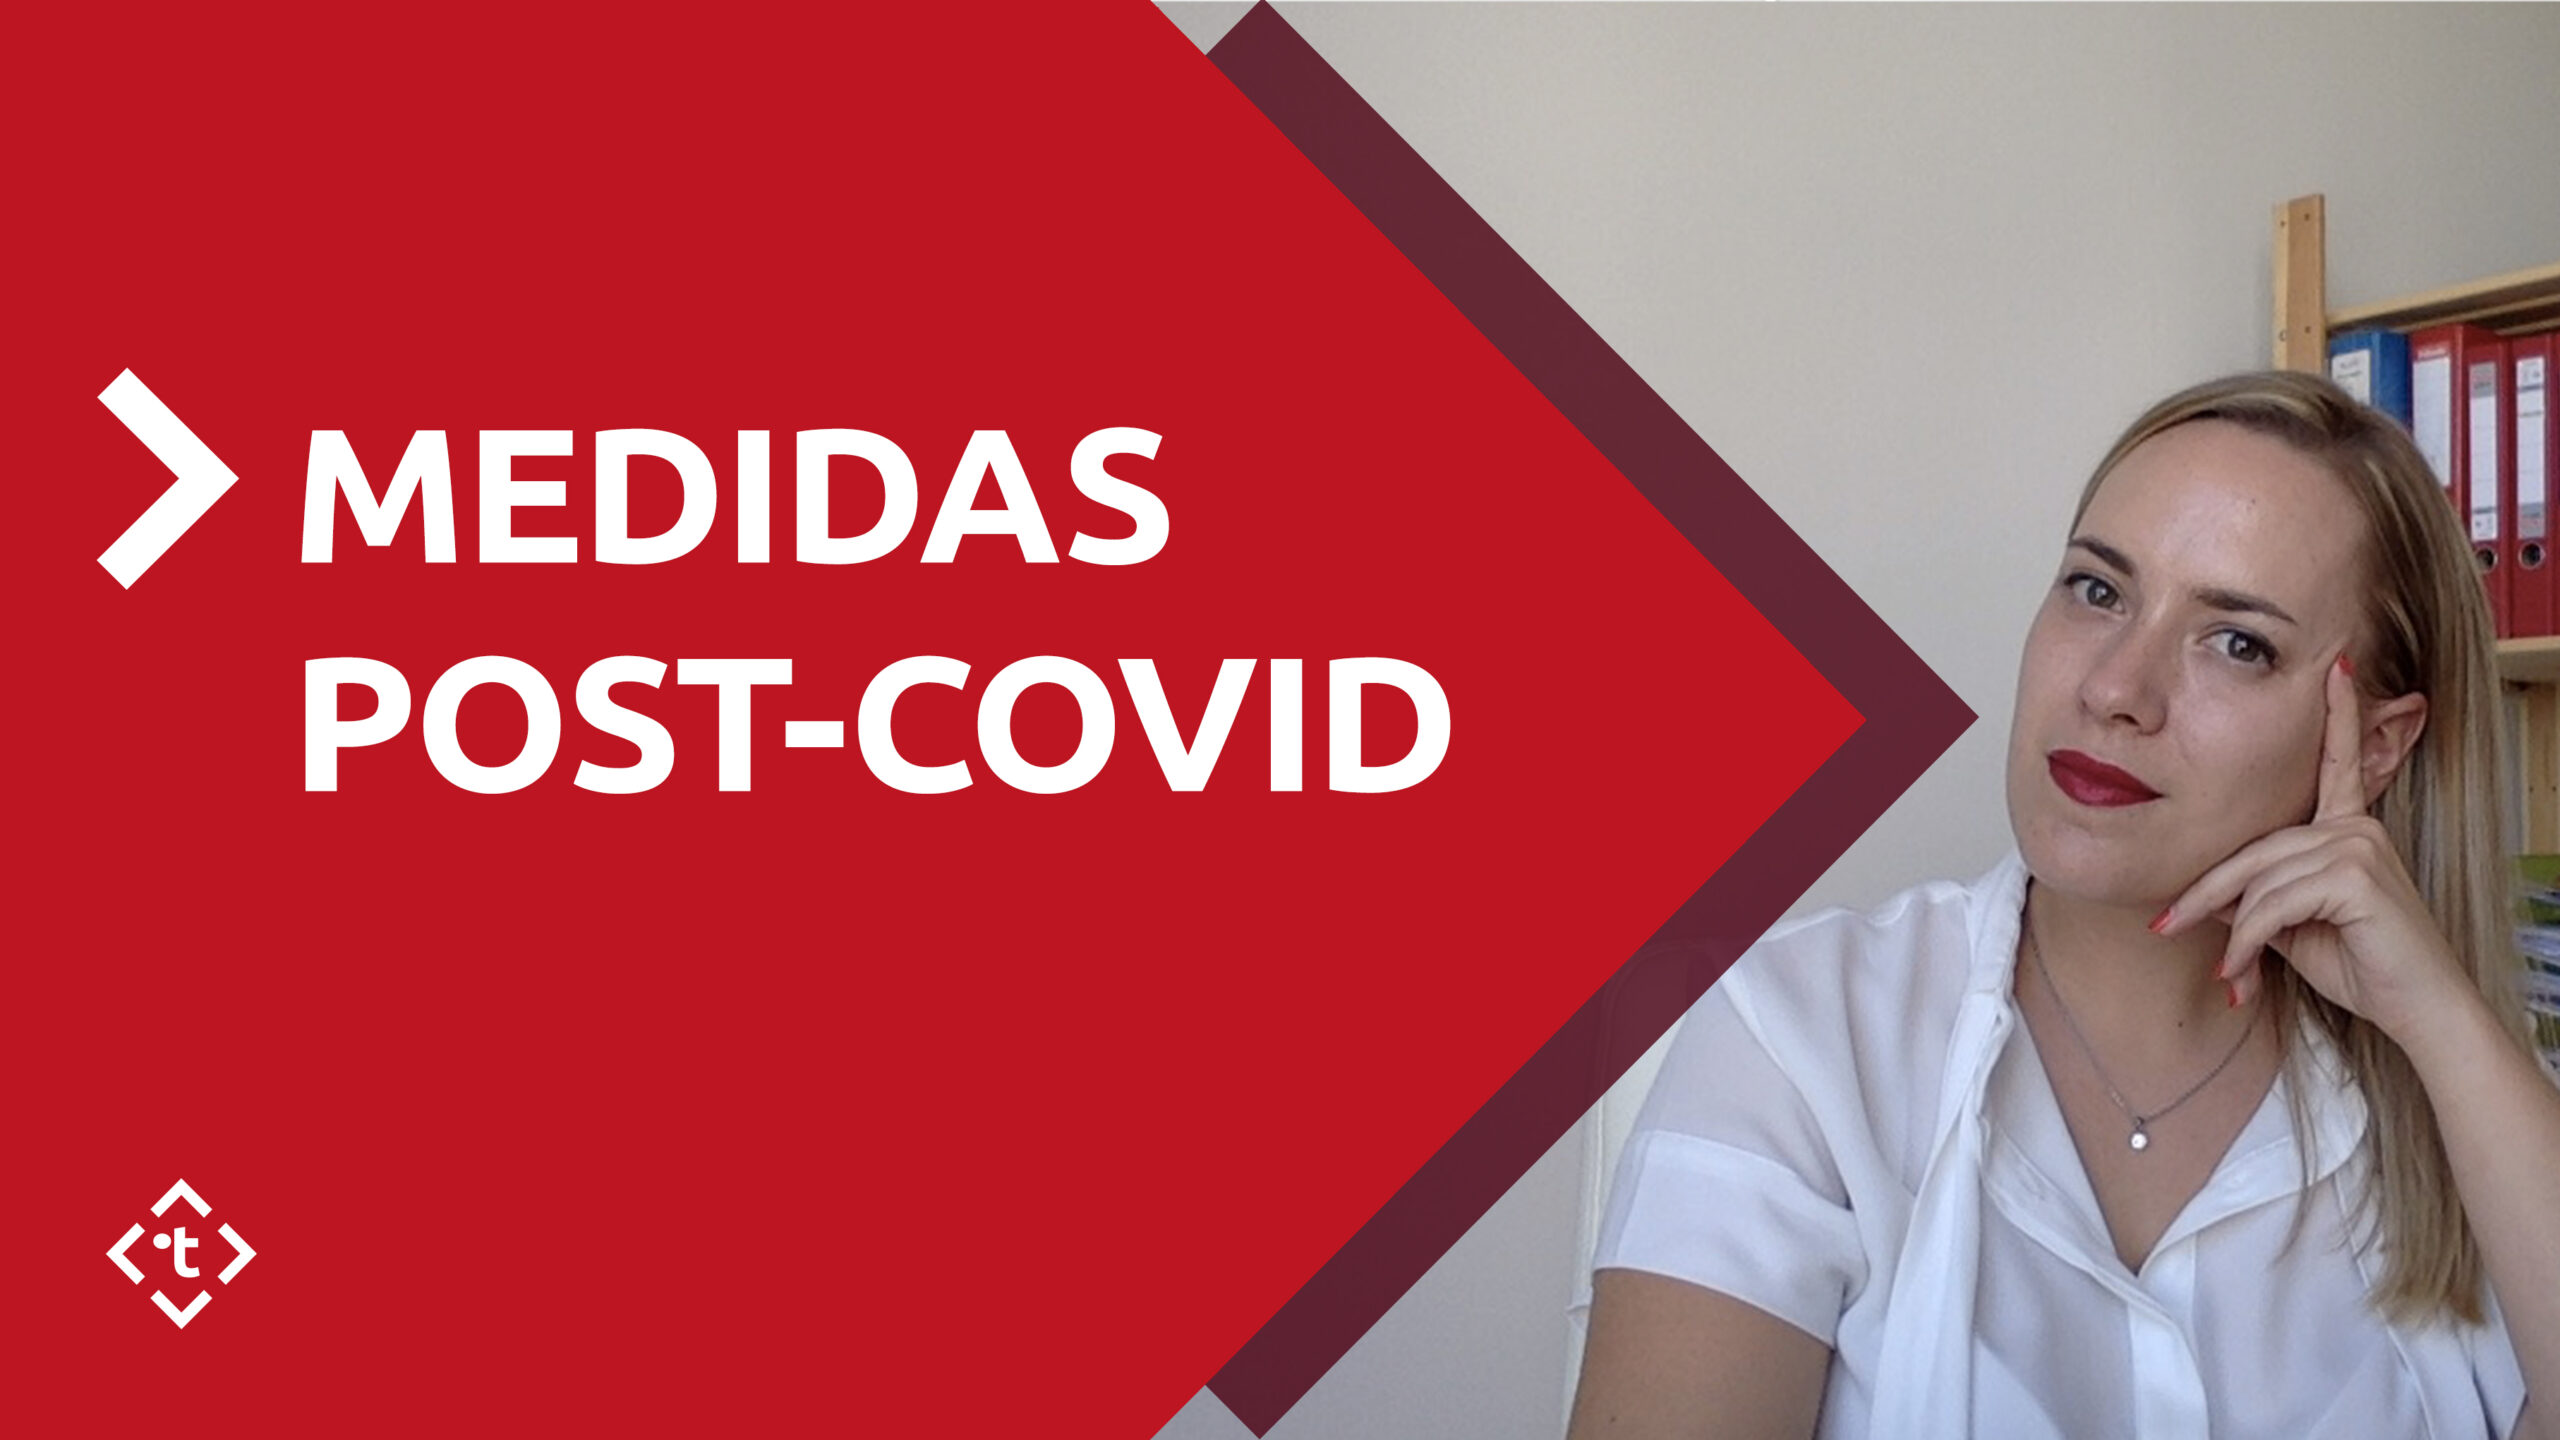 MEDIDAS POST-COVID